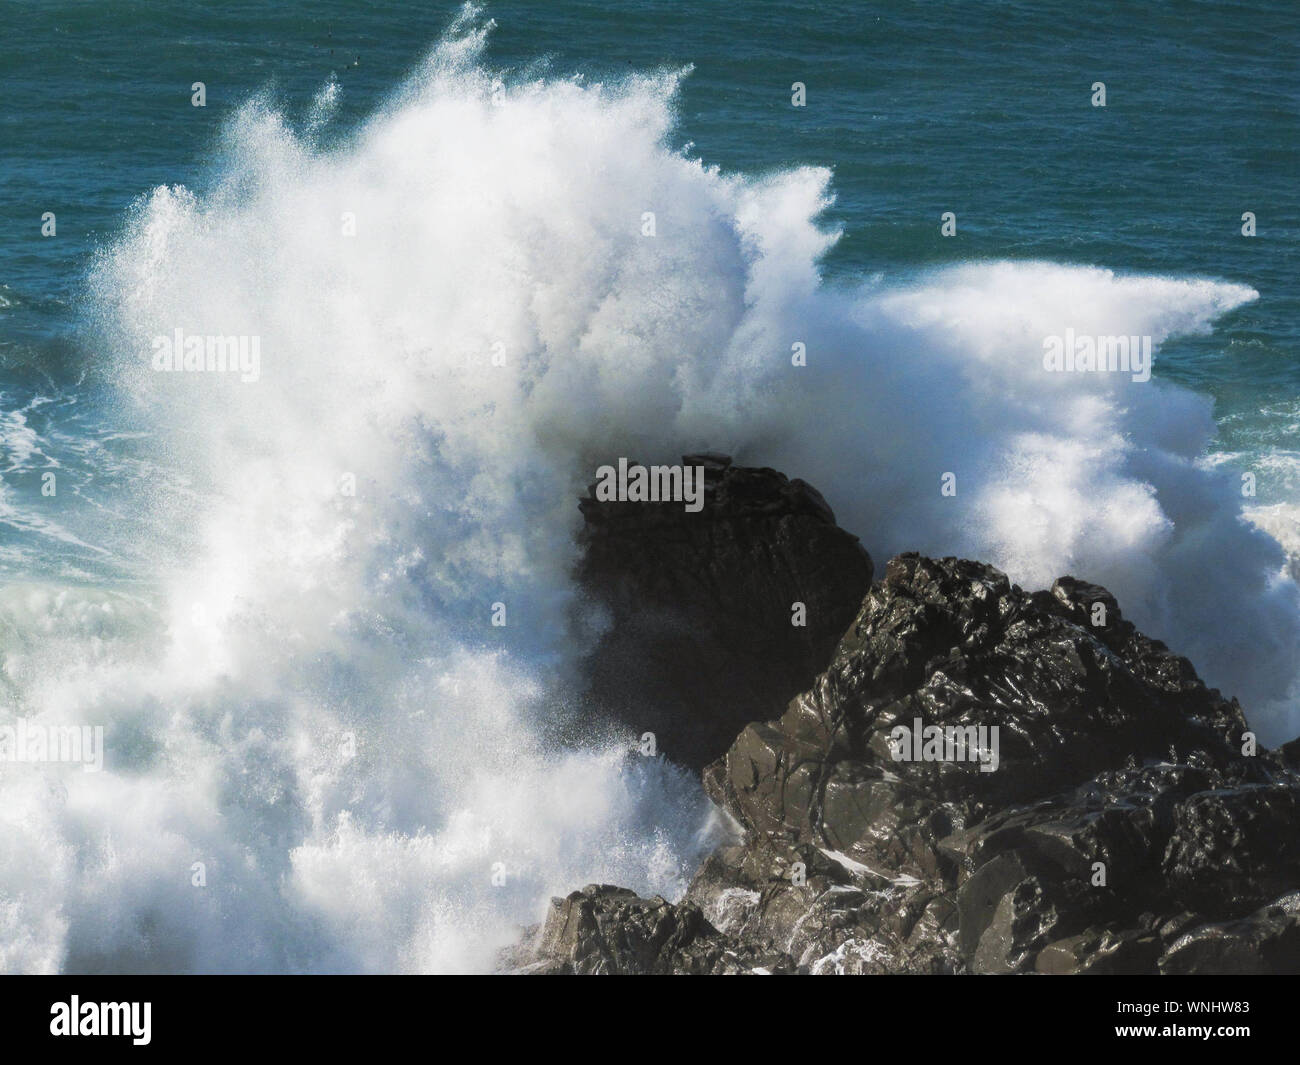 High Angle View Of Waves Crashing On Rocks At Shore Stock Photo